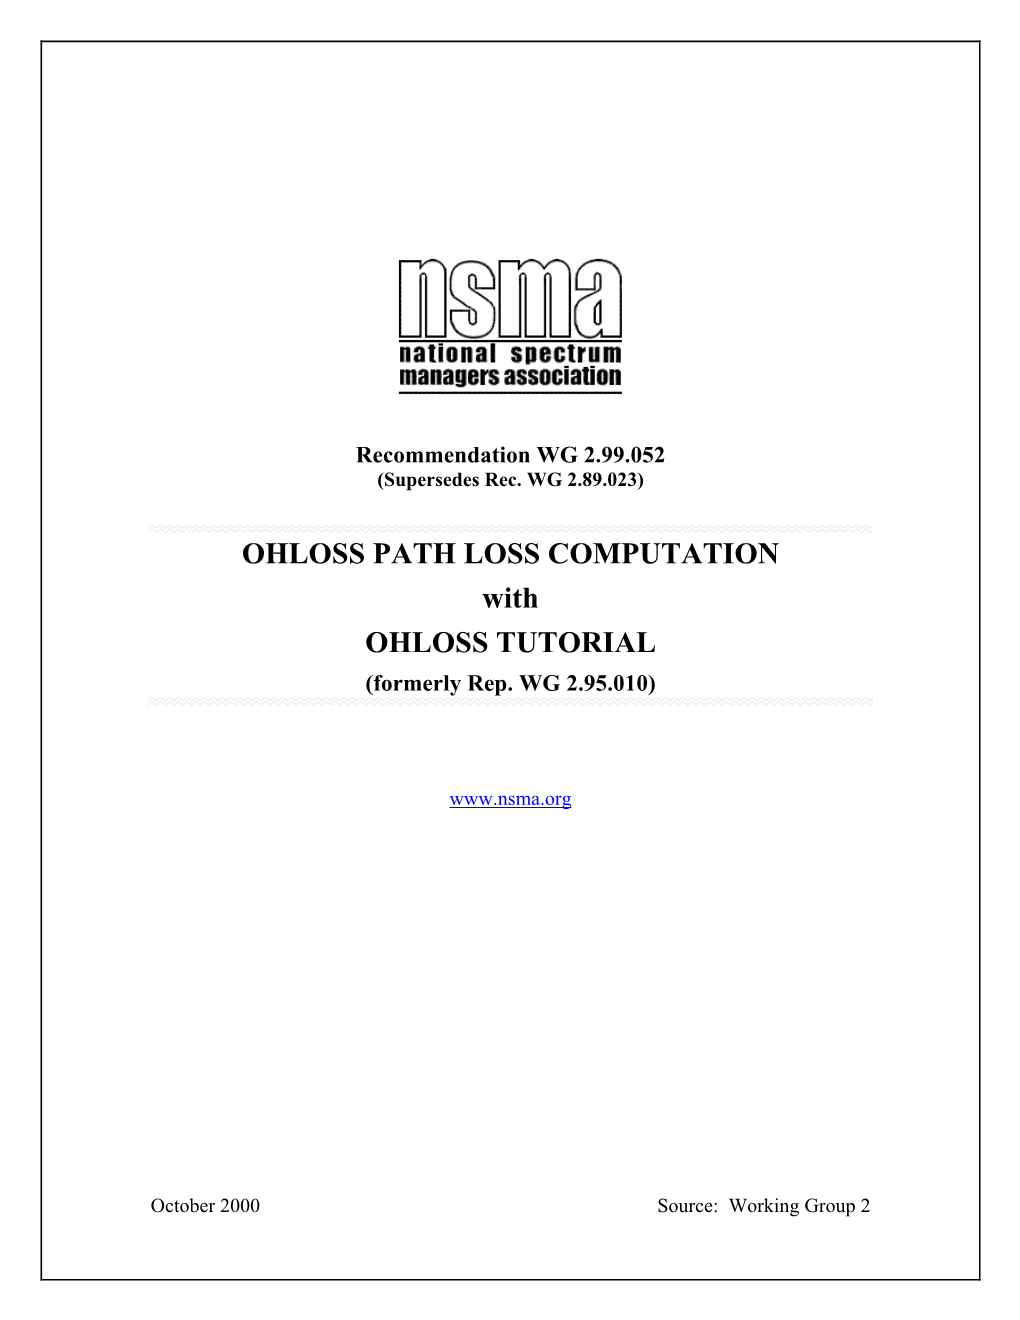 OHLOSS PATH LOSS COMPUTATION with OHLOSS TUTORIAL (Formerly Rep